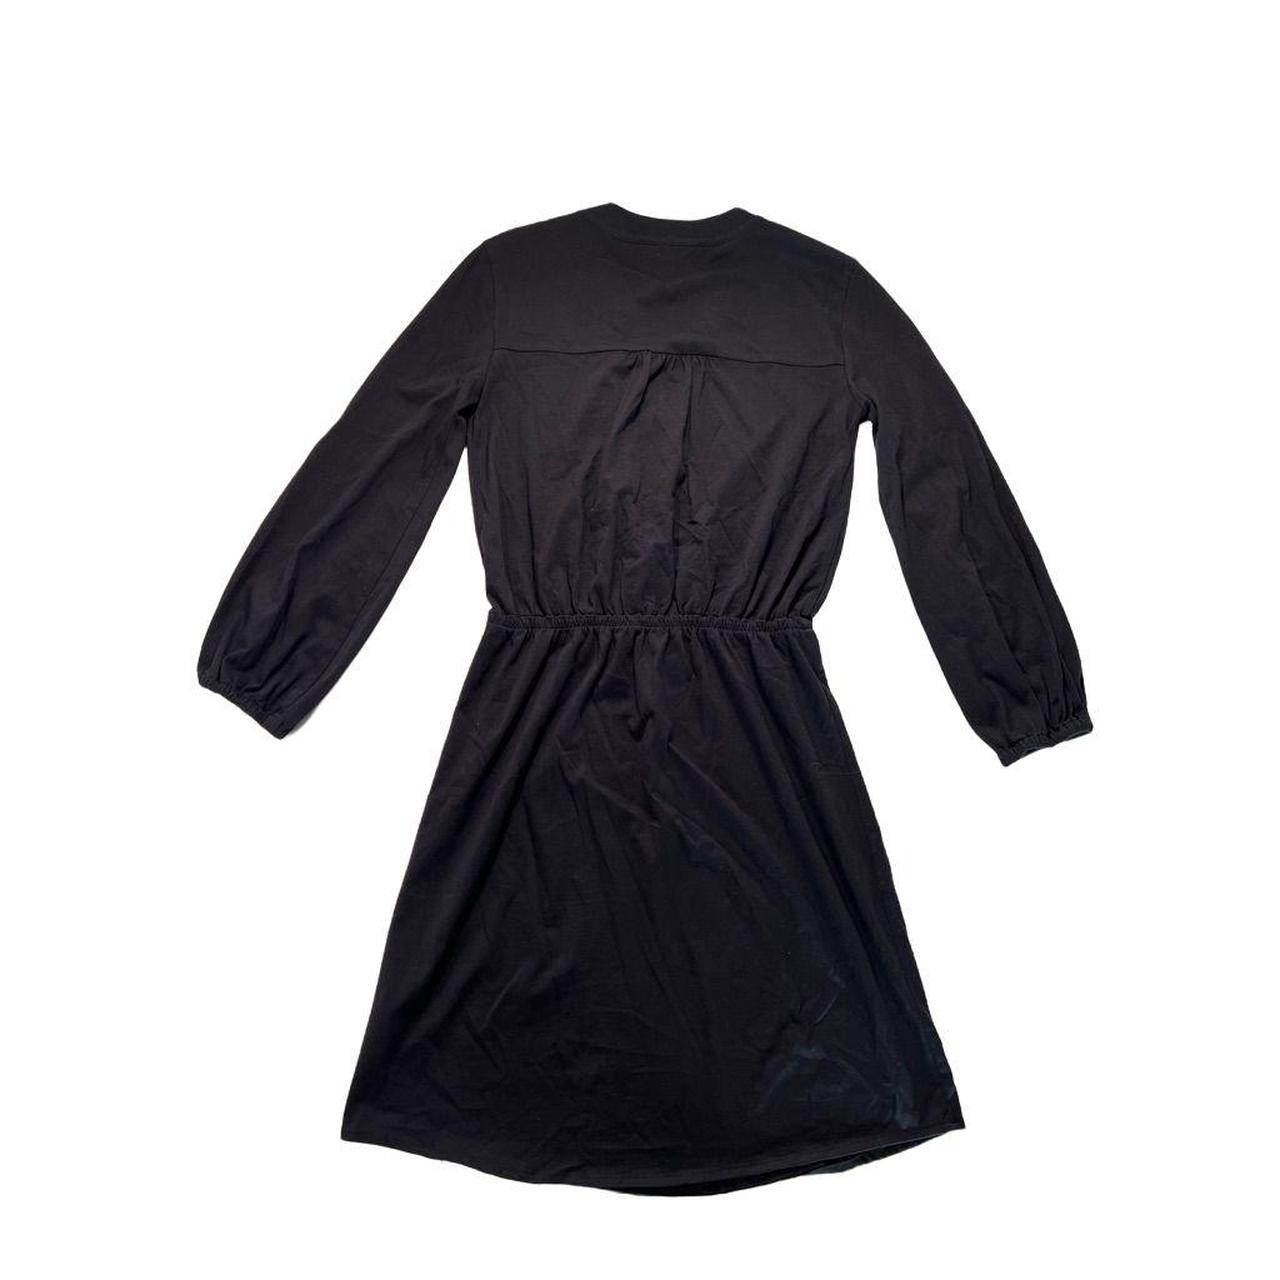 Lilly Pulitzer Women's Black Dress (2)